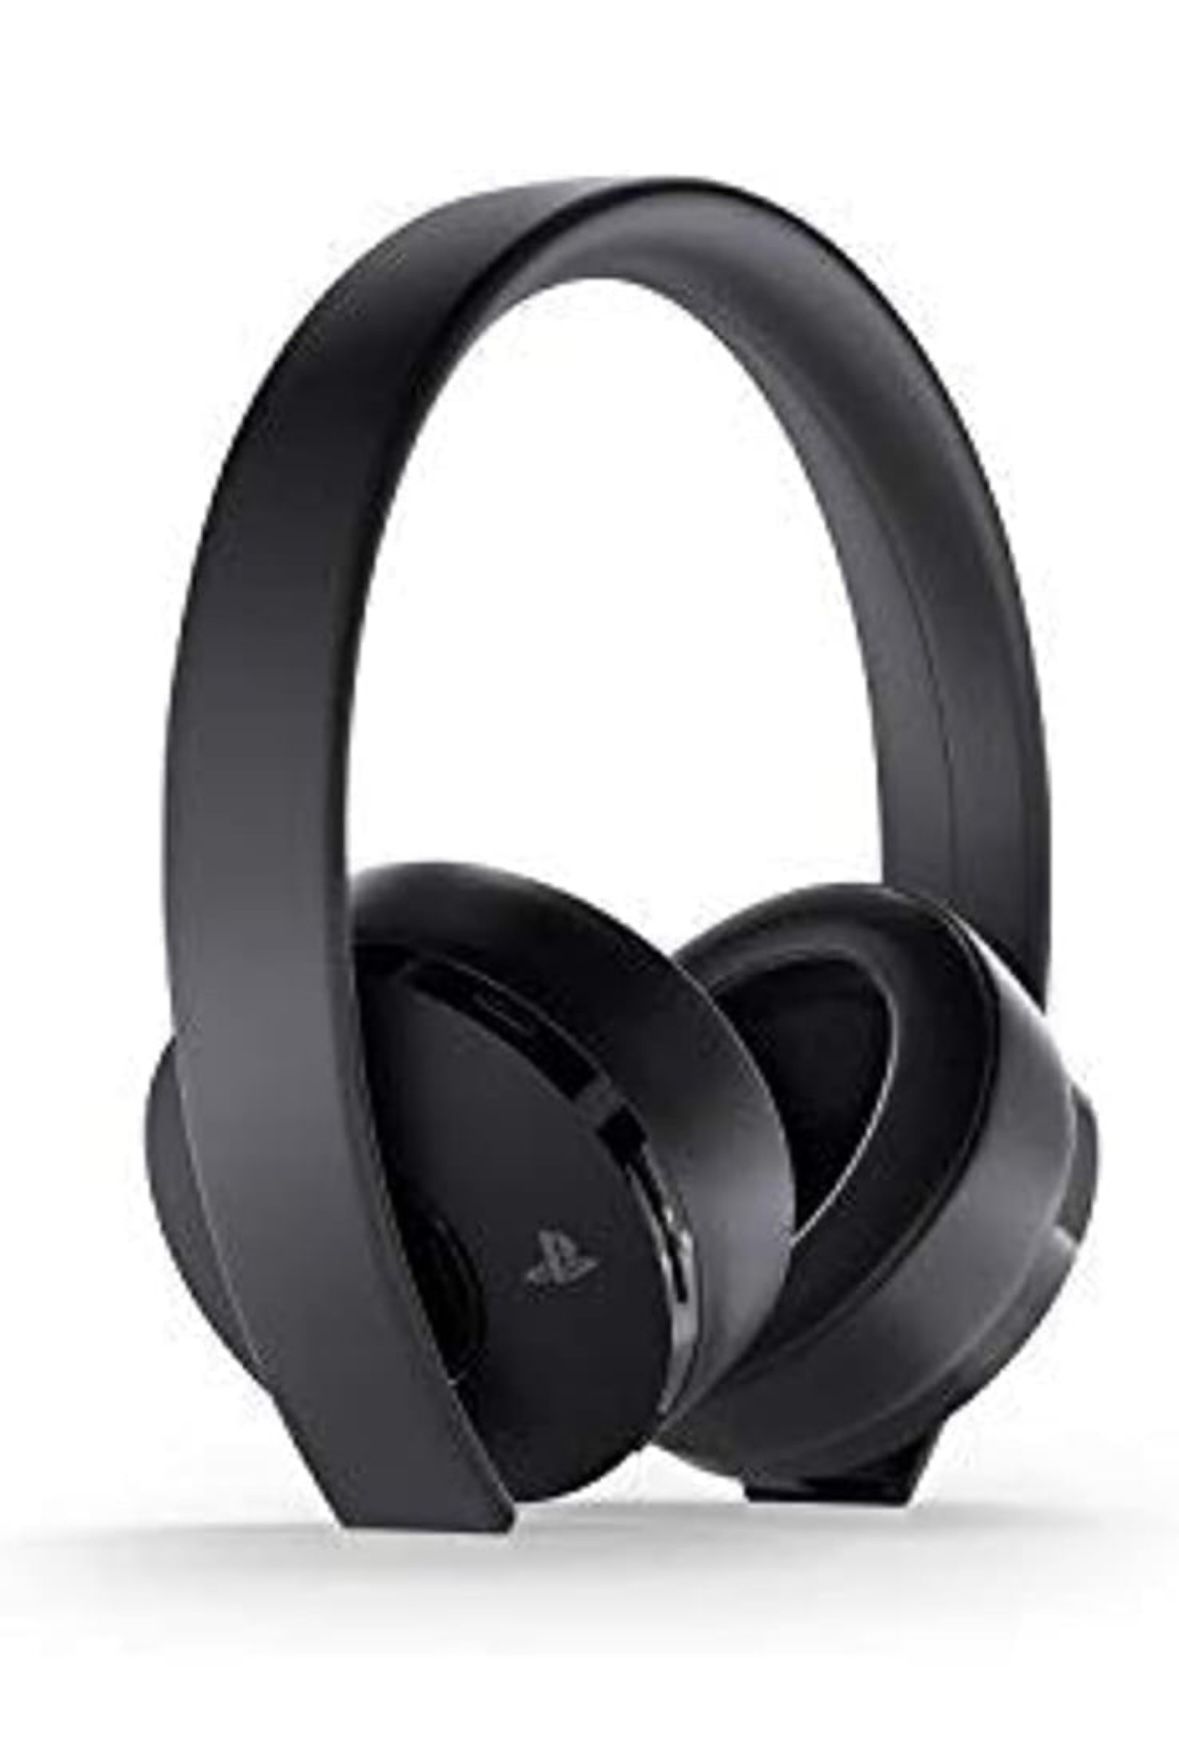 PlayStation 4 wireless headset